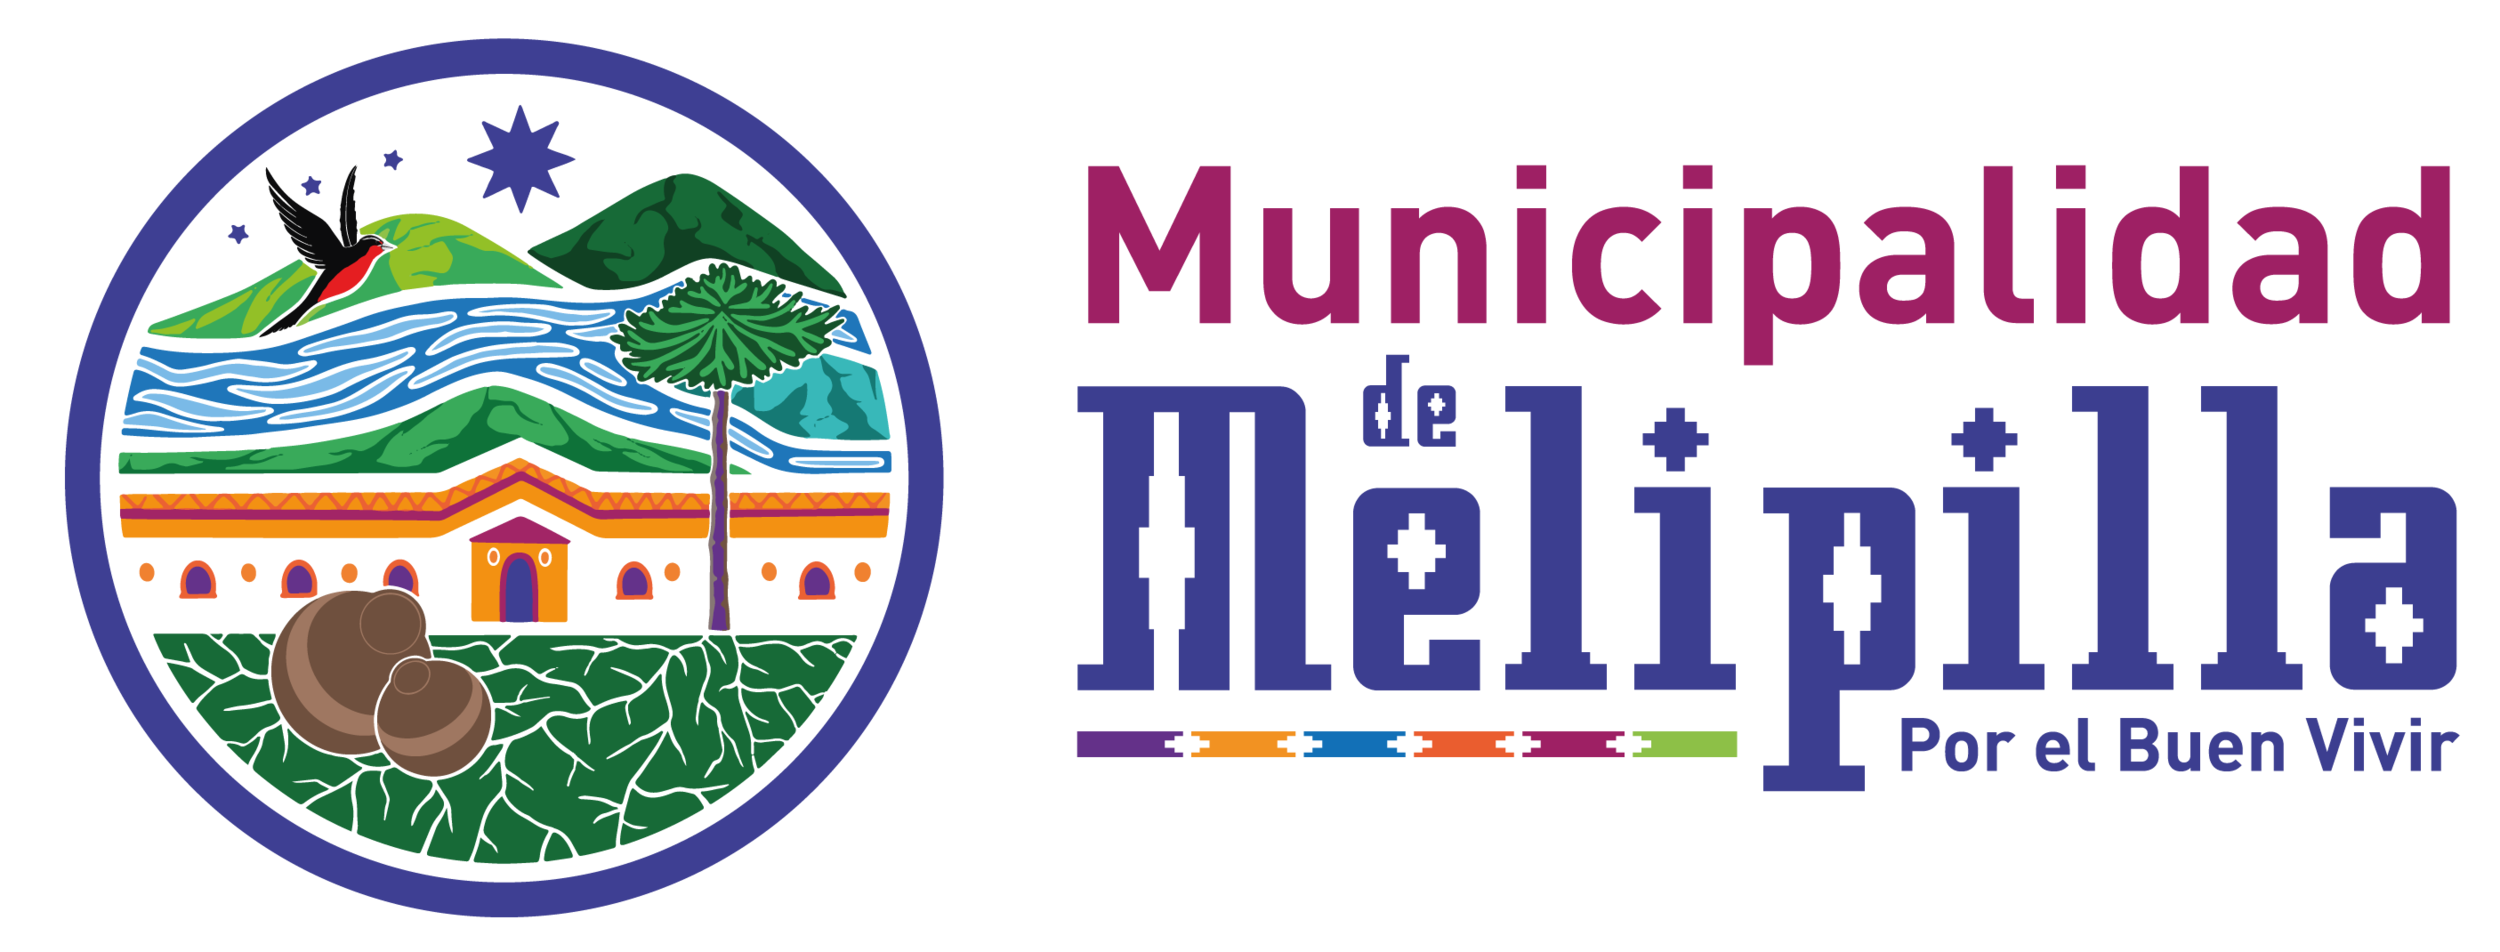 logotipo_municipalidad_de_melipilla.png